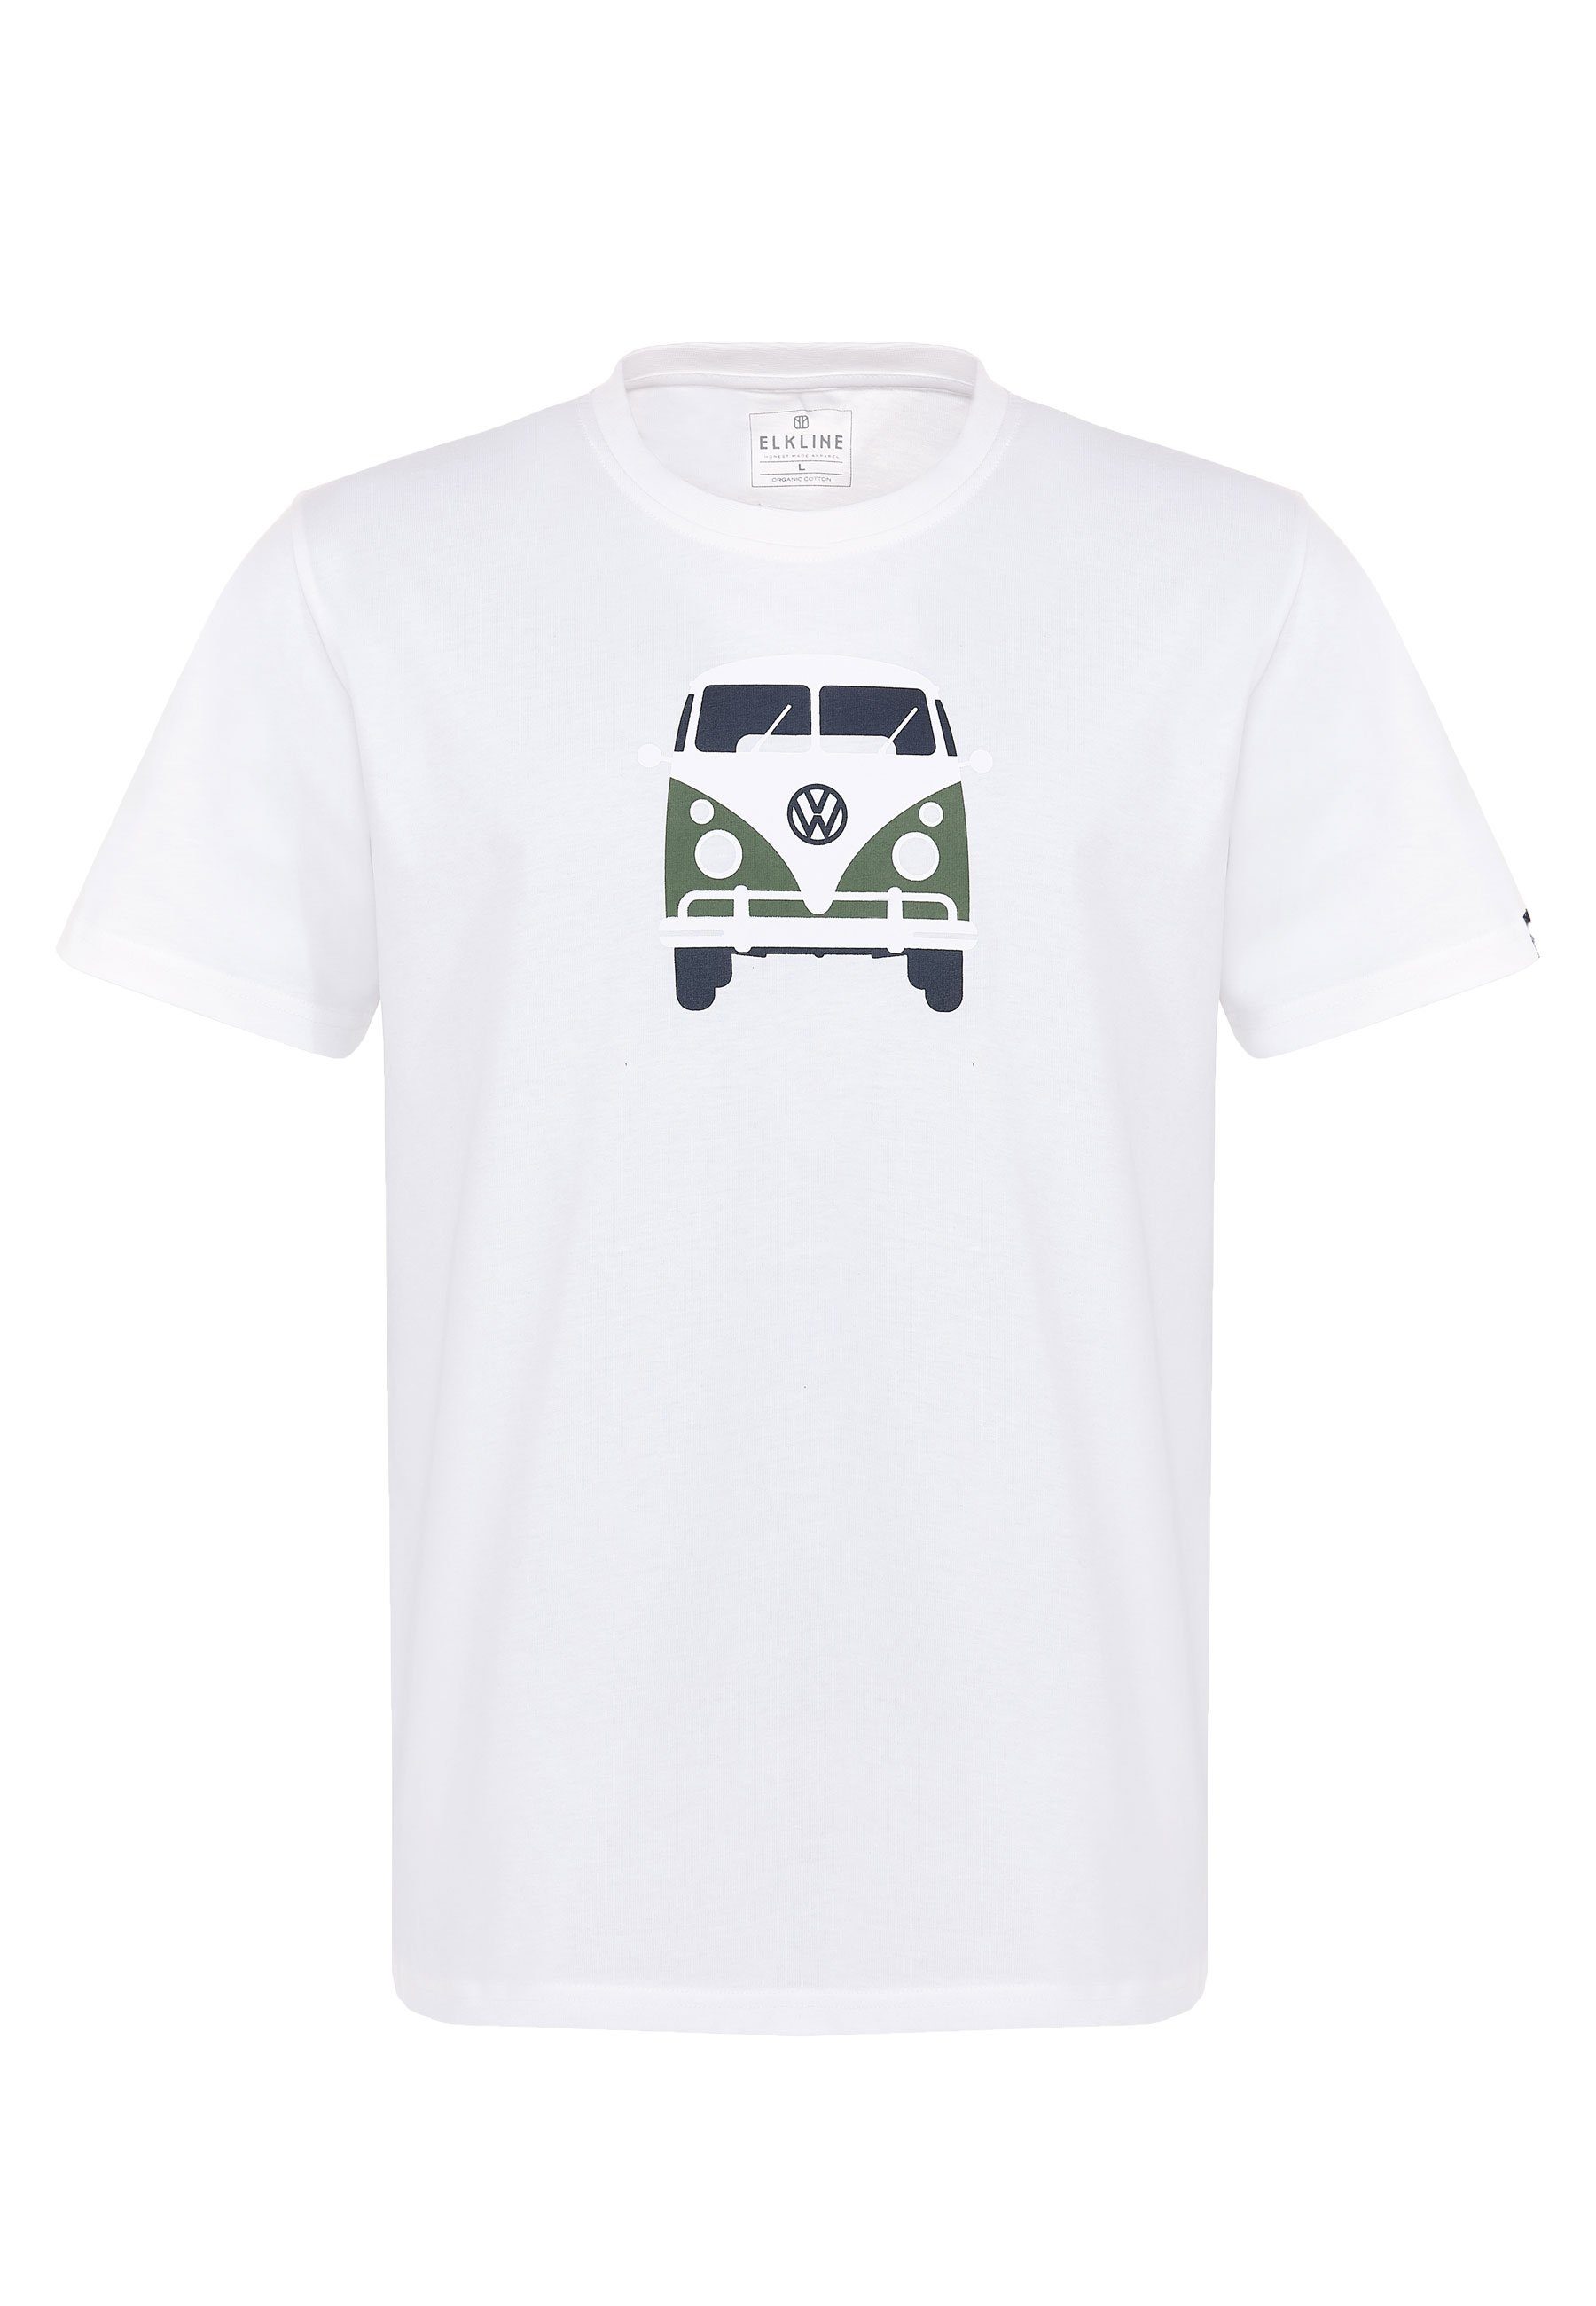 Methusalem VW T-Shirt Rücken Elkline White lizenzierter Print Brust Bulli